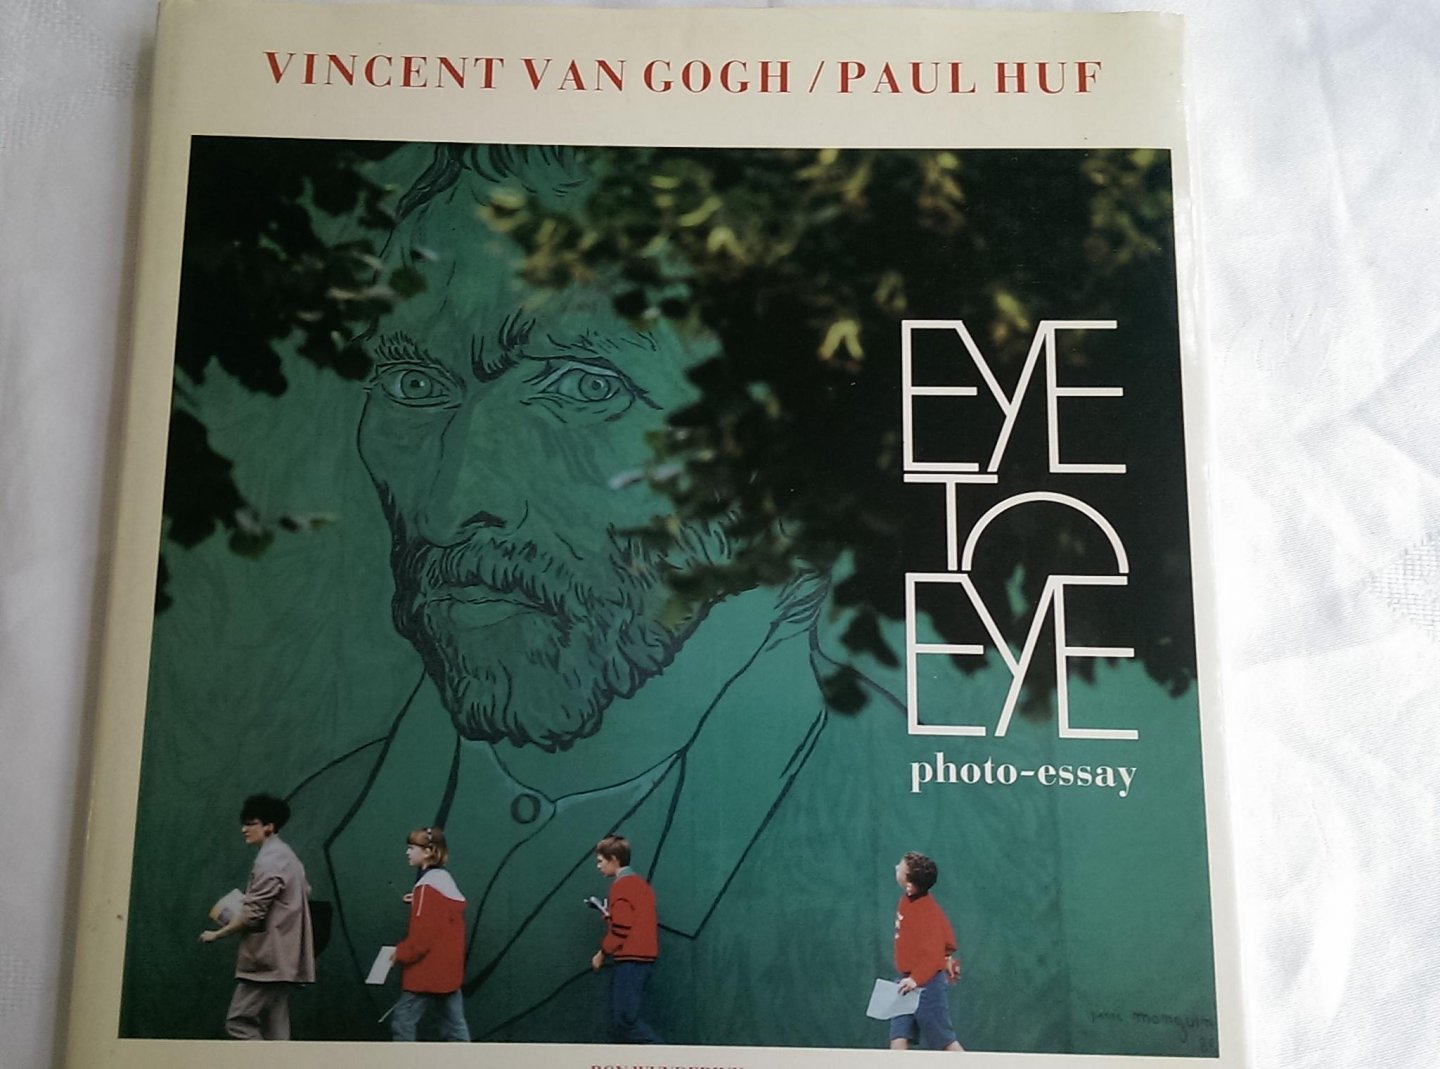 Wunderink, Ron - Eye to Eye photo-essay Vincent van Gogh Paul Huf